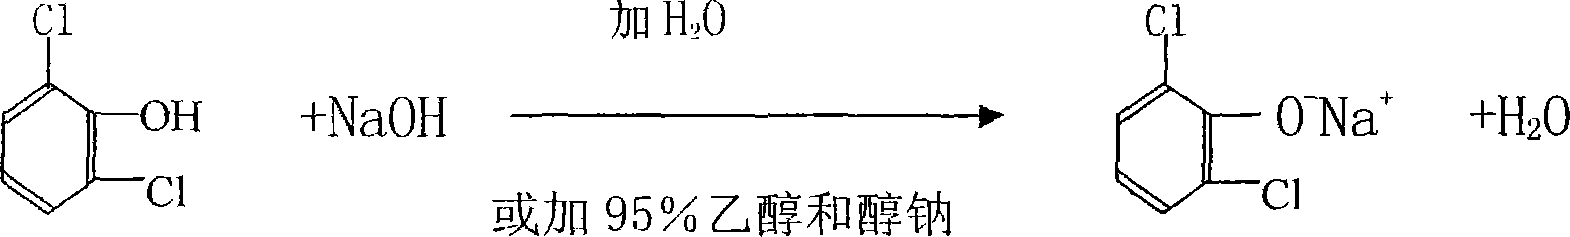 Novel technique for producing 2,6-dichloro diphenylamine